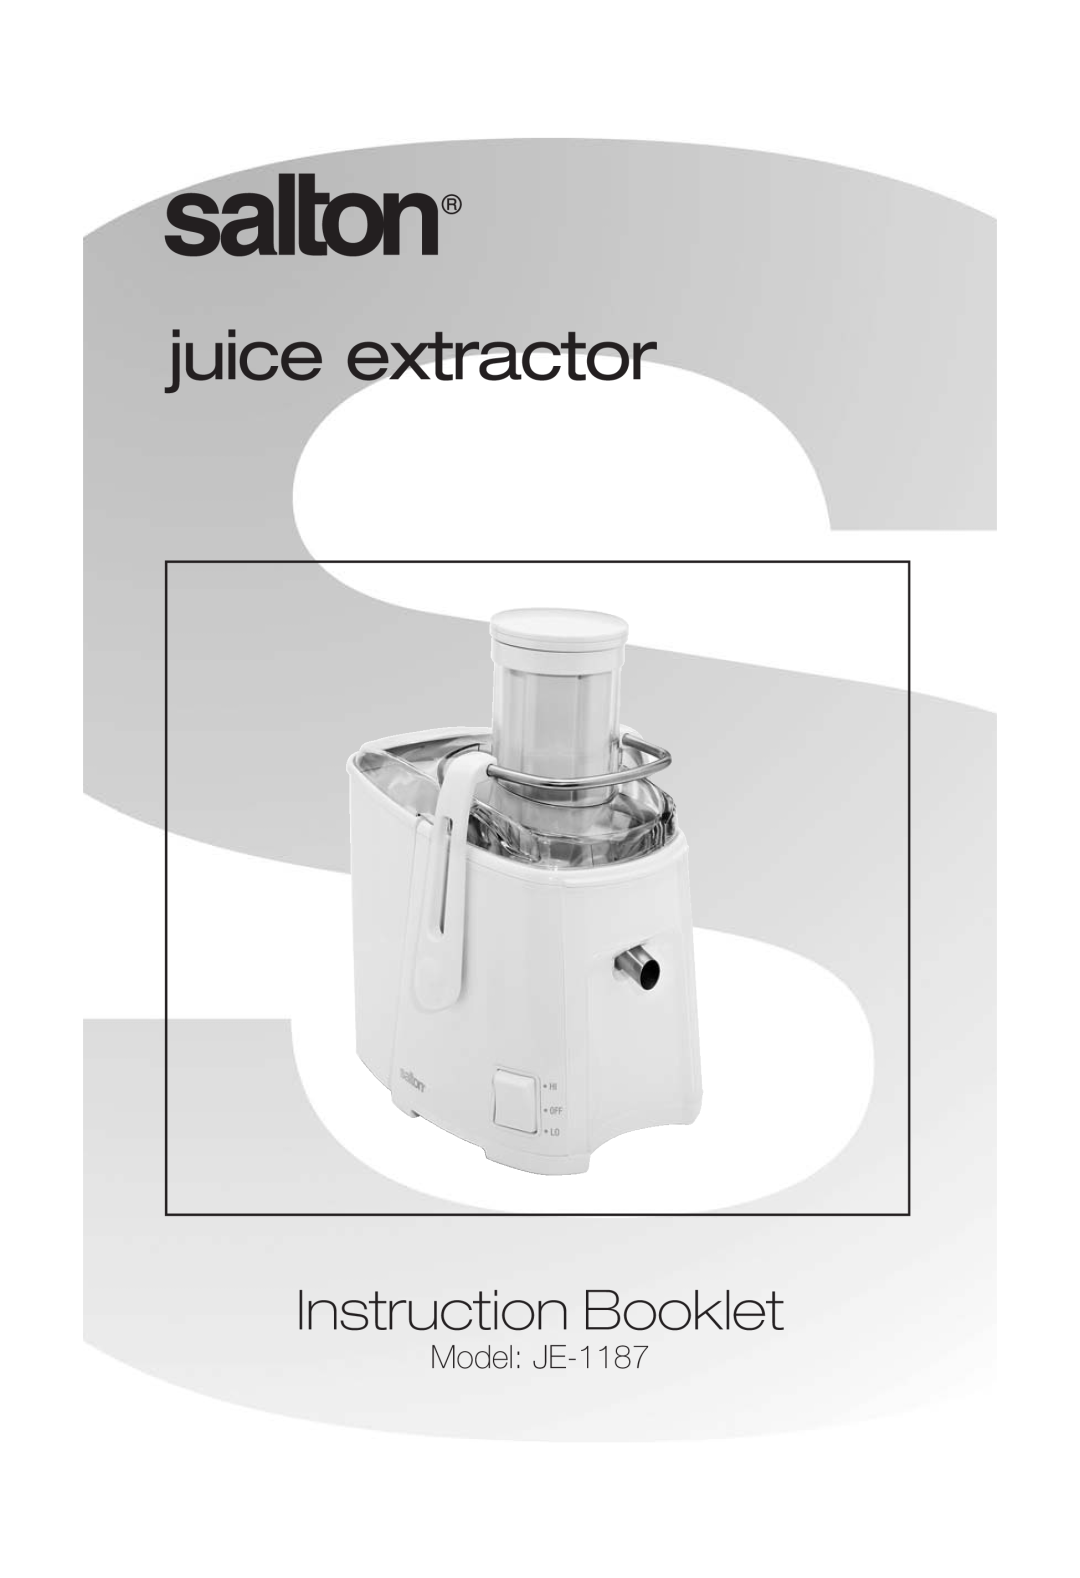 Salton manual juice extractor, Instruction Booklet, Model JE-1187 